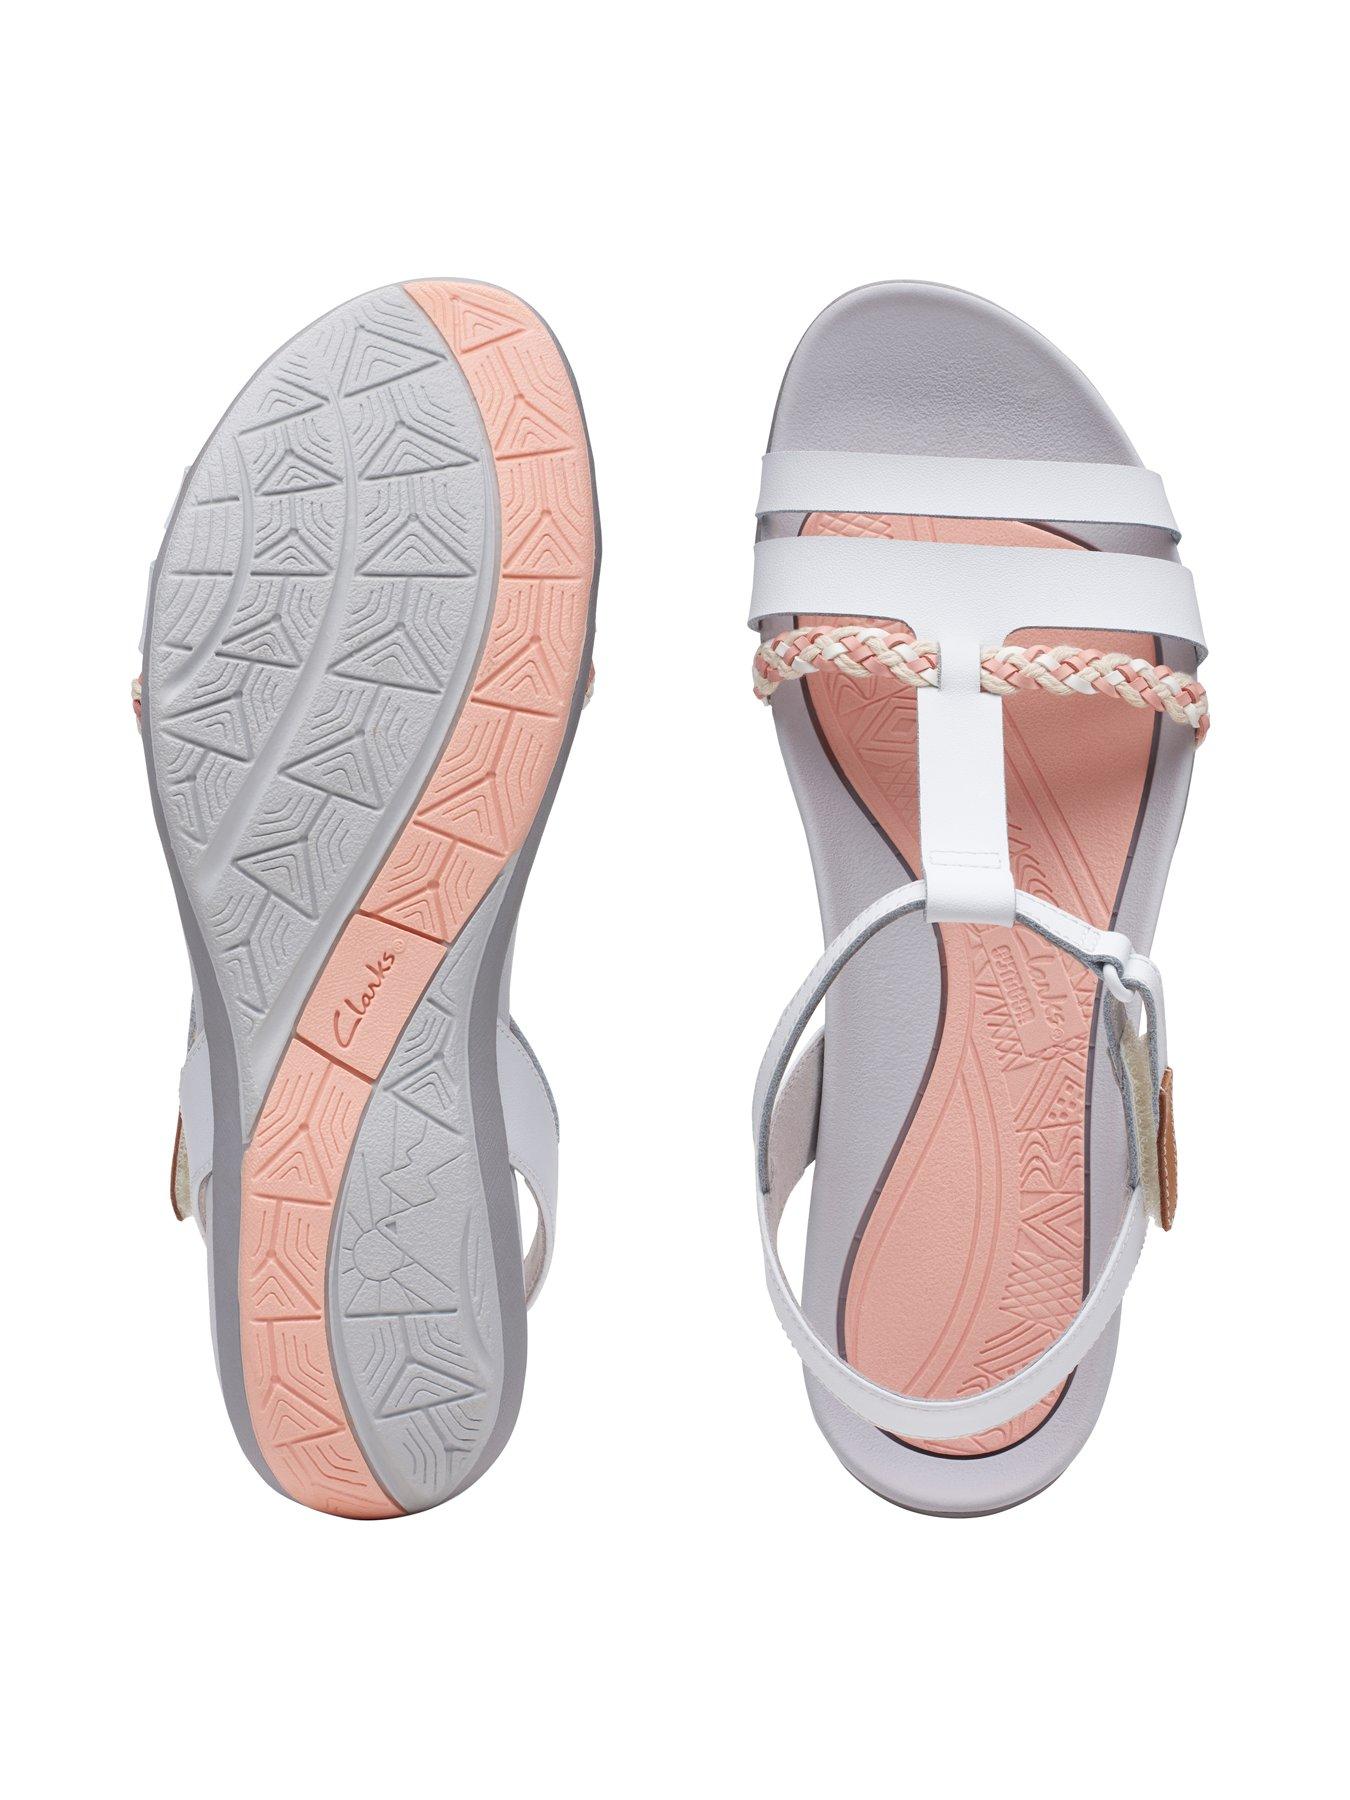 clarks women's tealite grace sandals